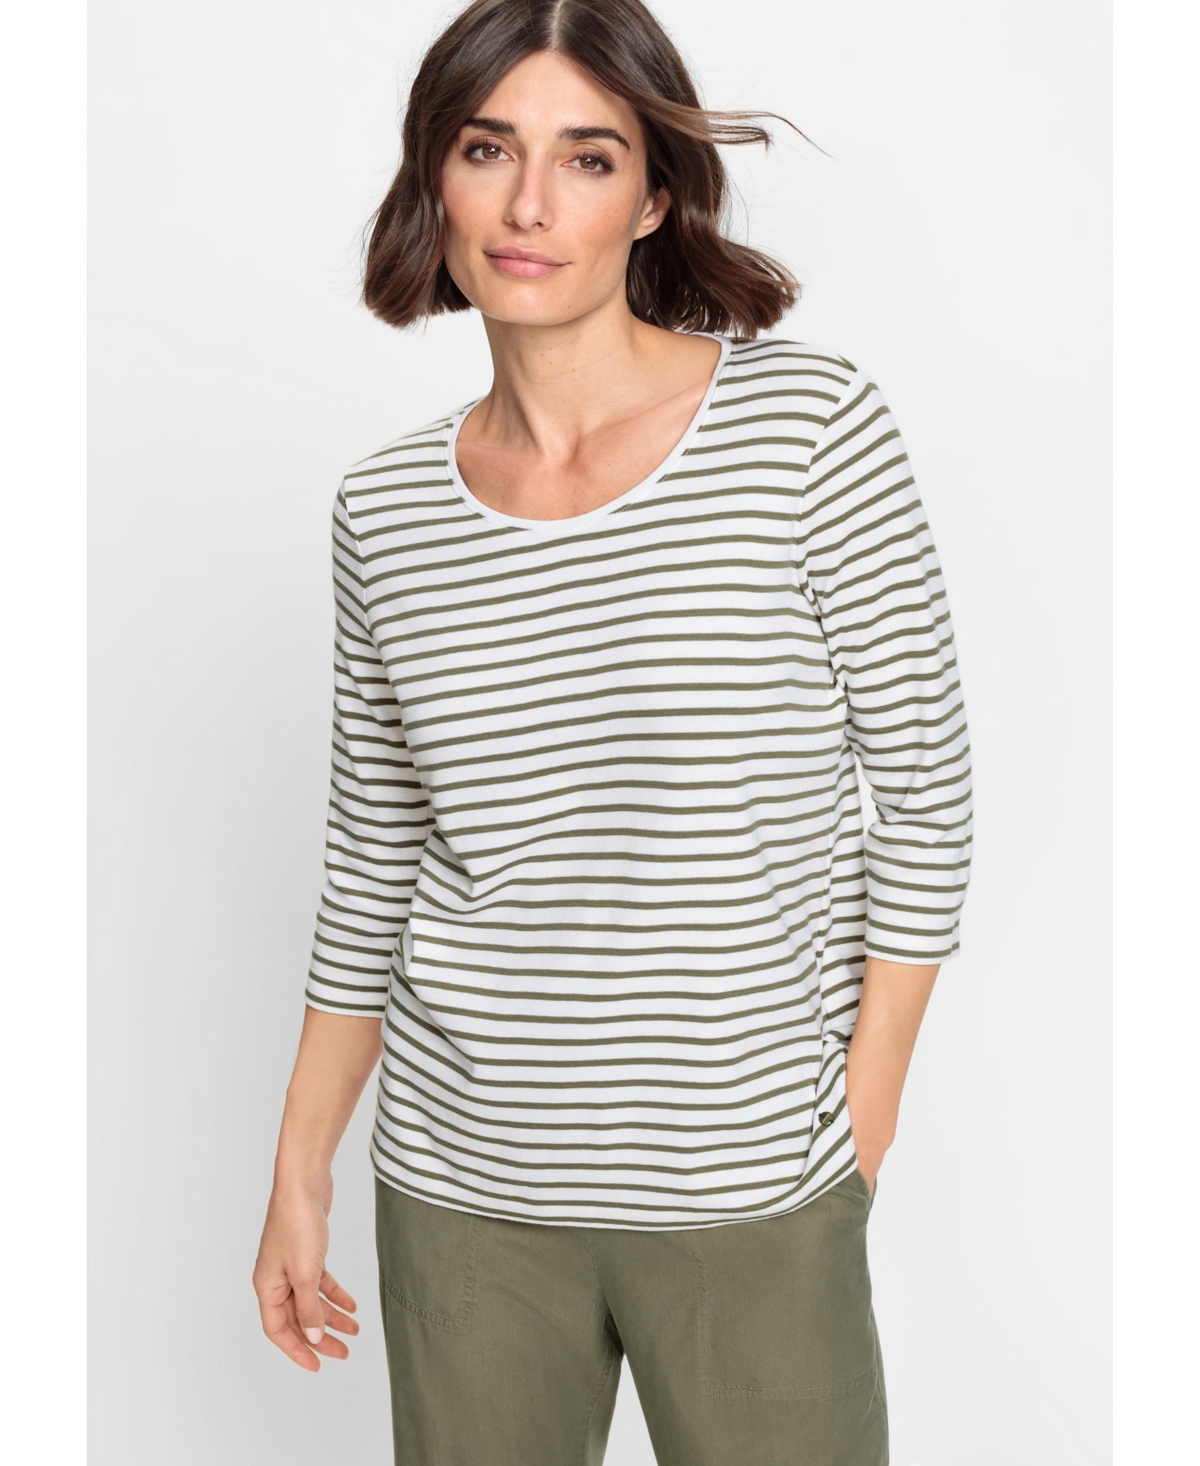 Women's 100% Cotton 3/4 Sleeve Striped T-Shirt - Dk khaki